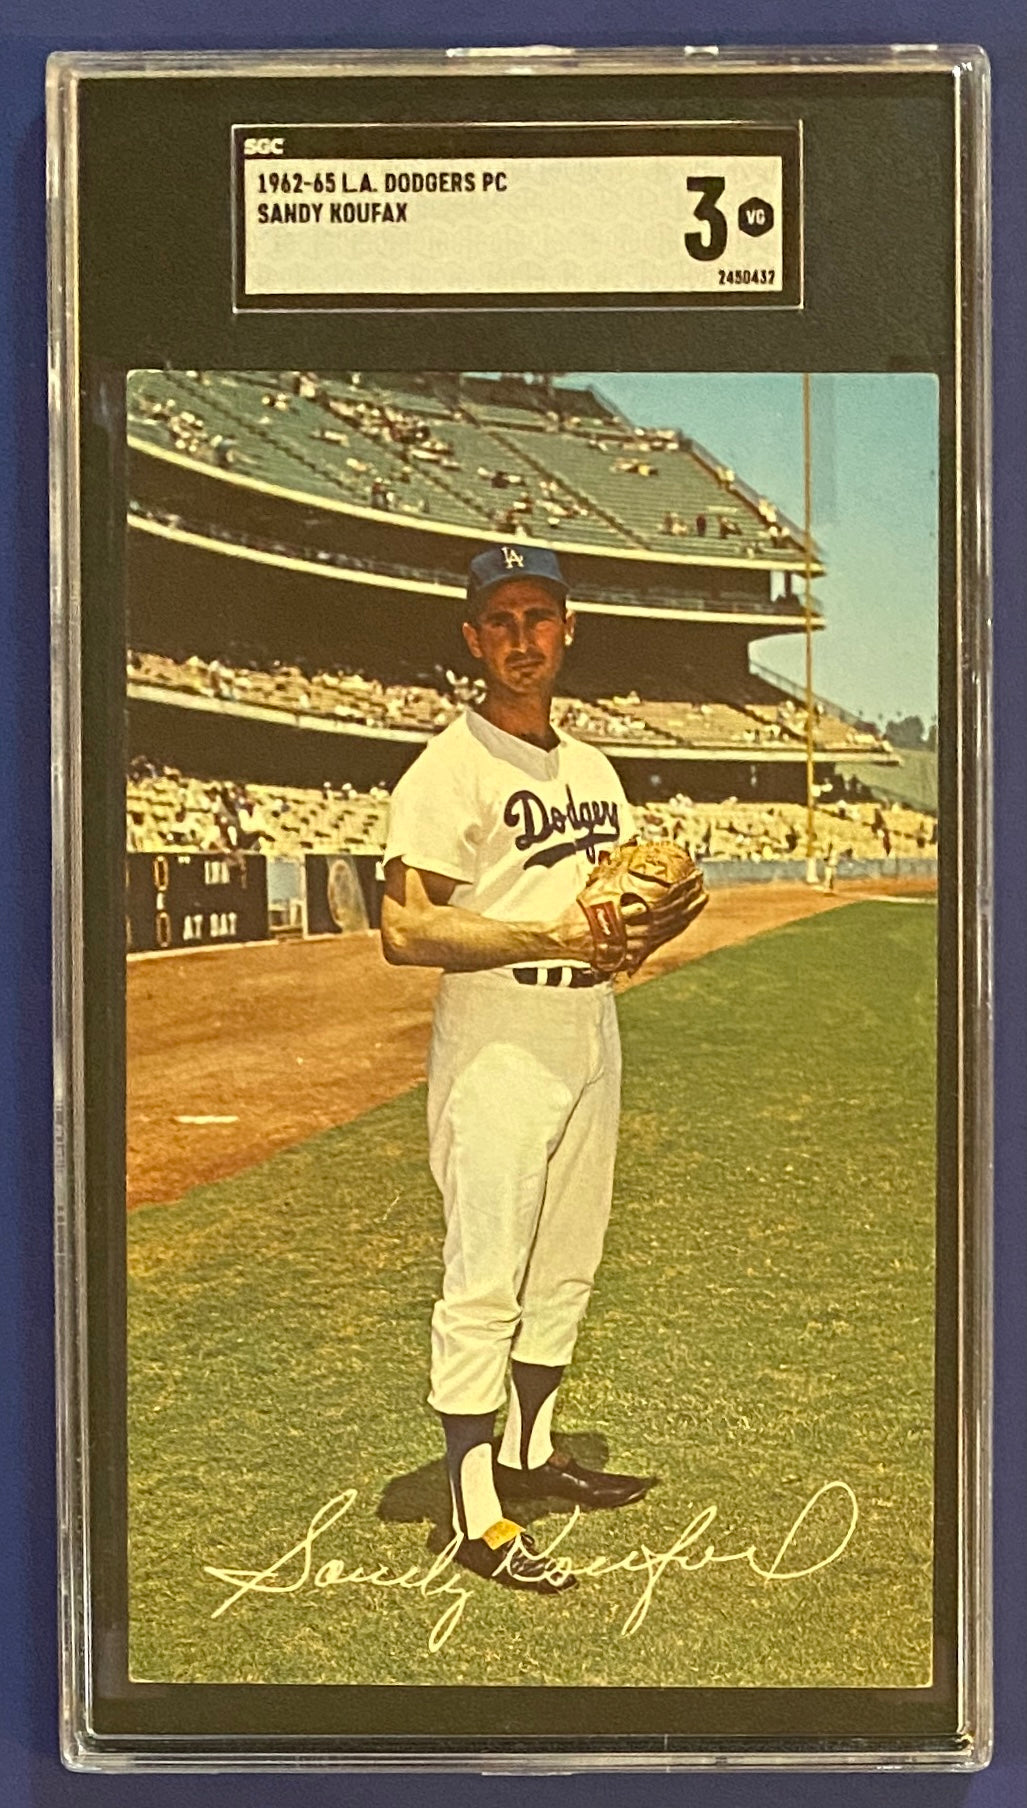 Sandy Koufax 1962-65 L.A. Dodgers PC SGC 3